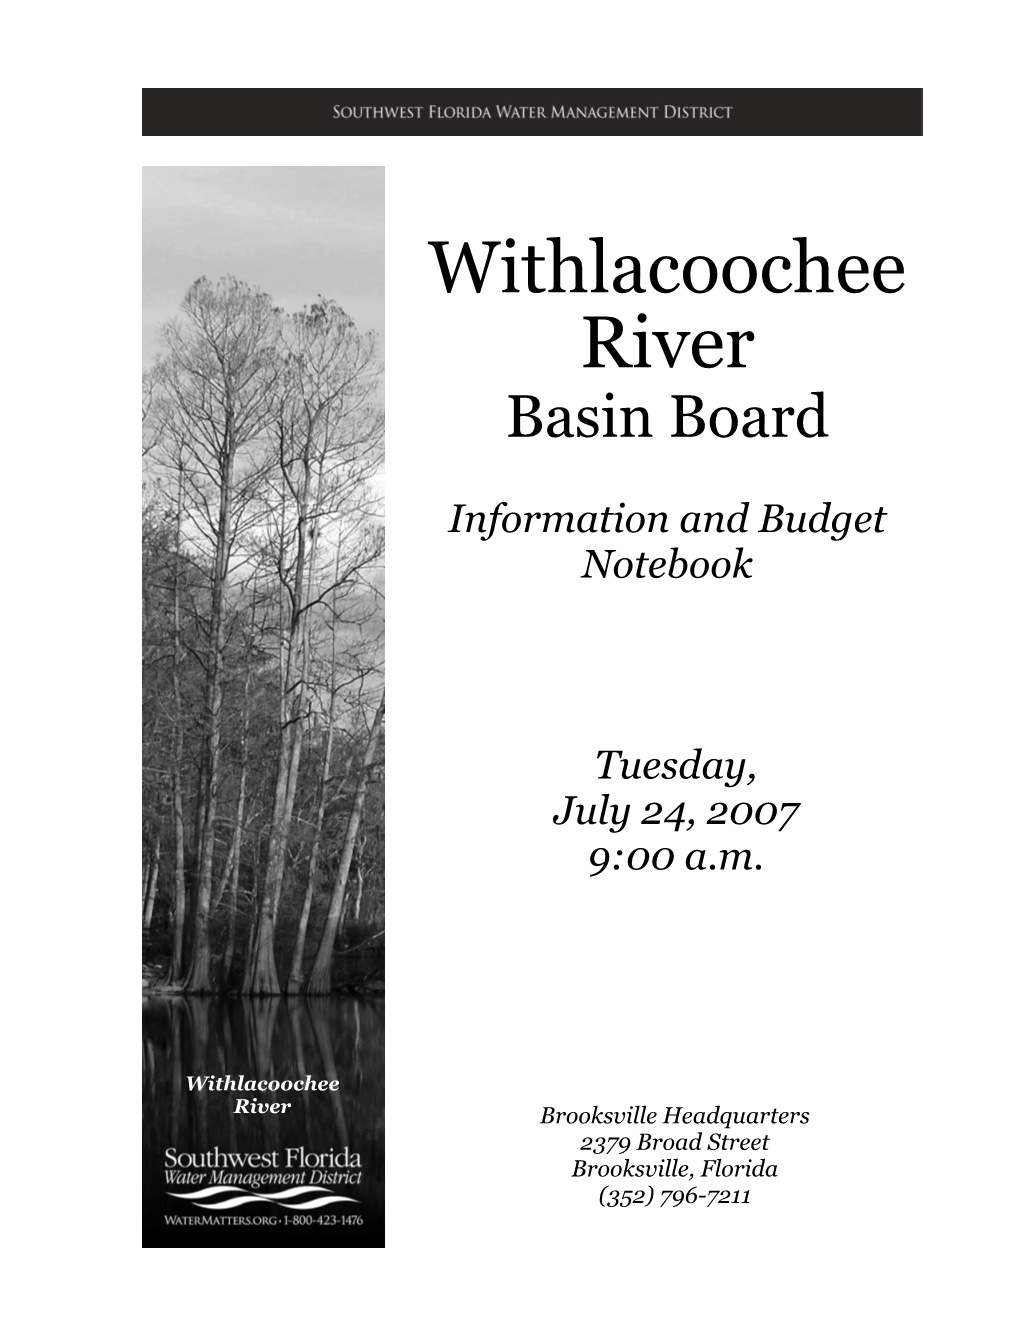 Withlacoochee River Basin Board Information Notebook